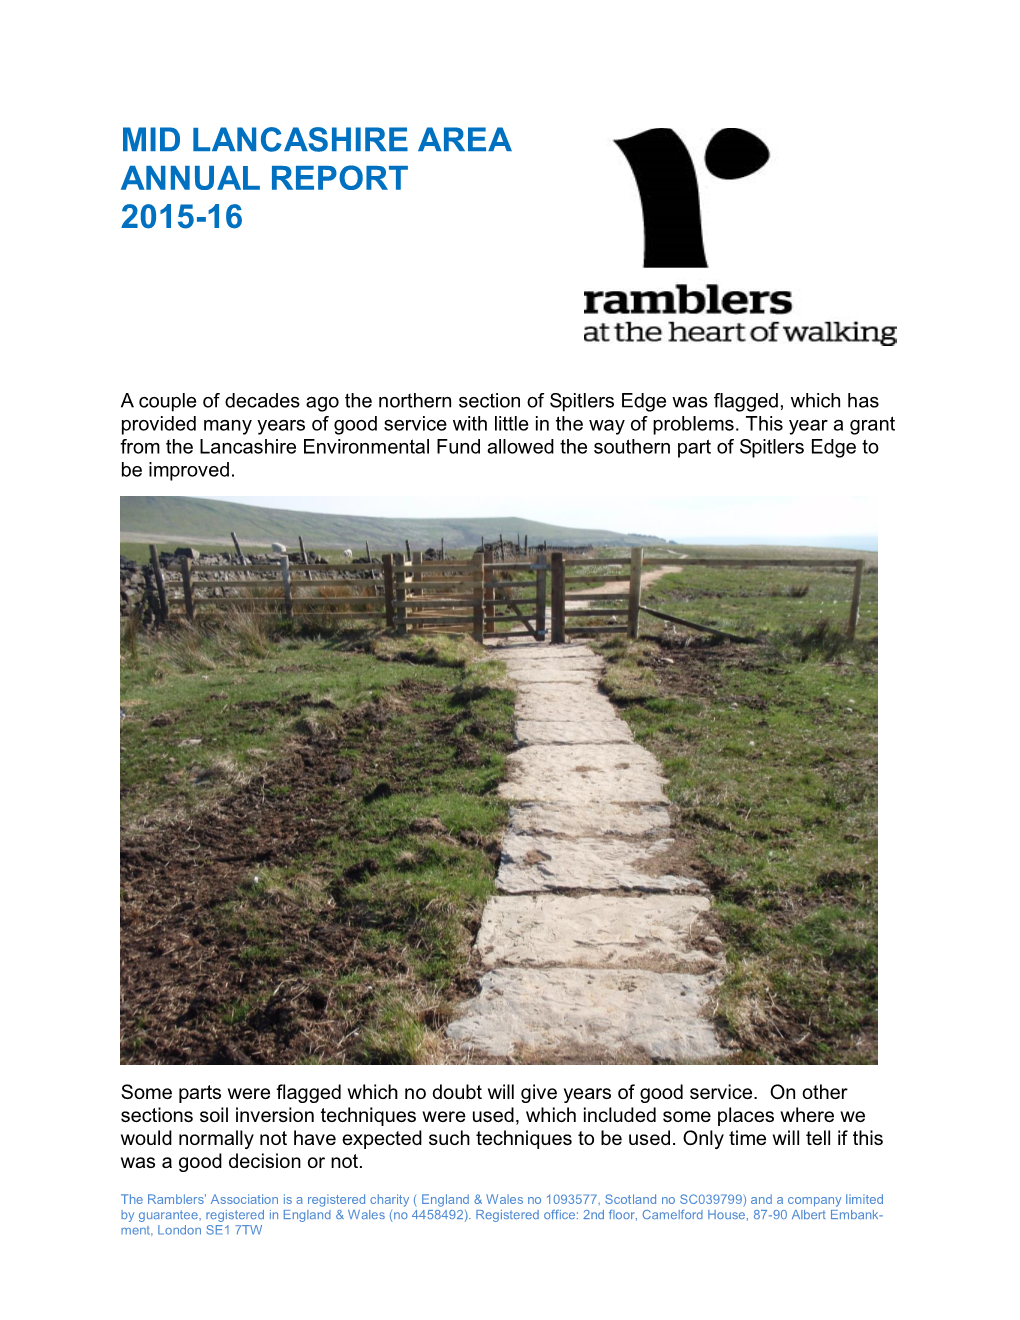 Mid Lancashire Area Annual Report 2015-16